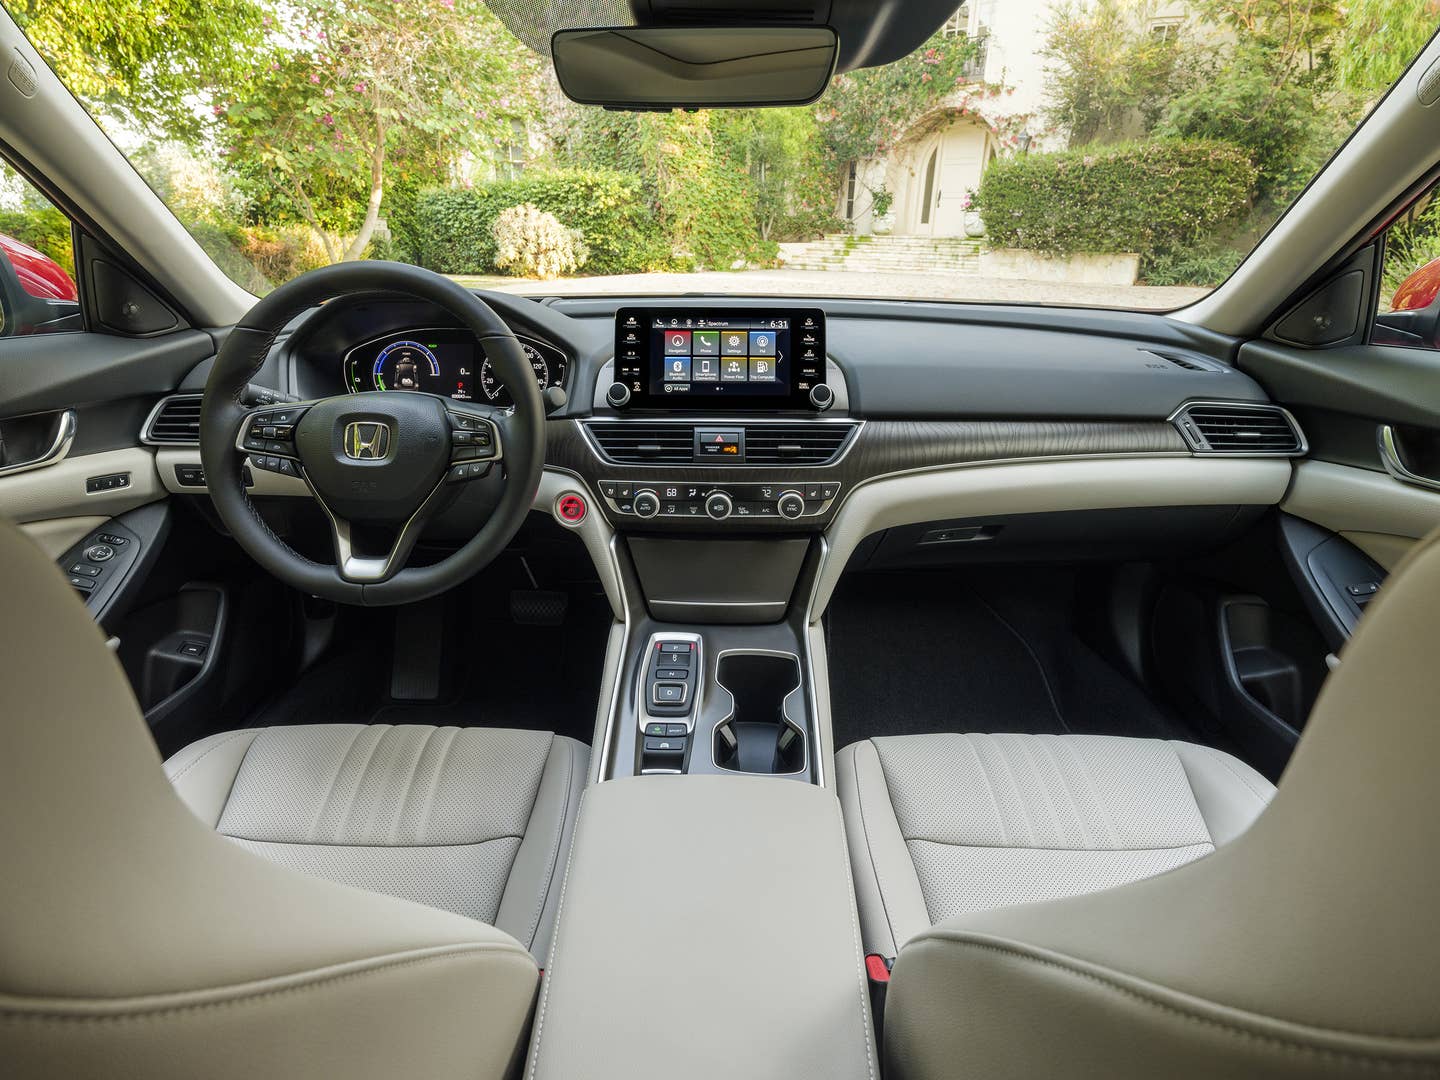 2021 Honda Accord interior.